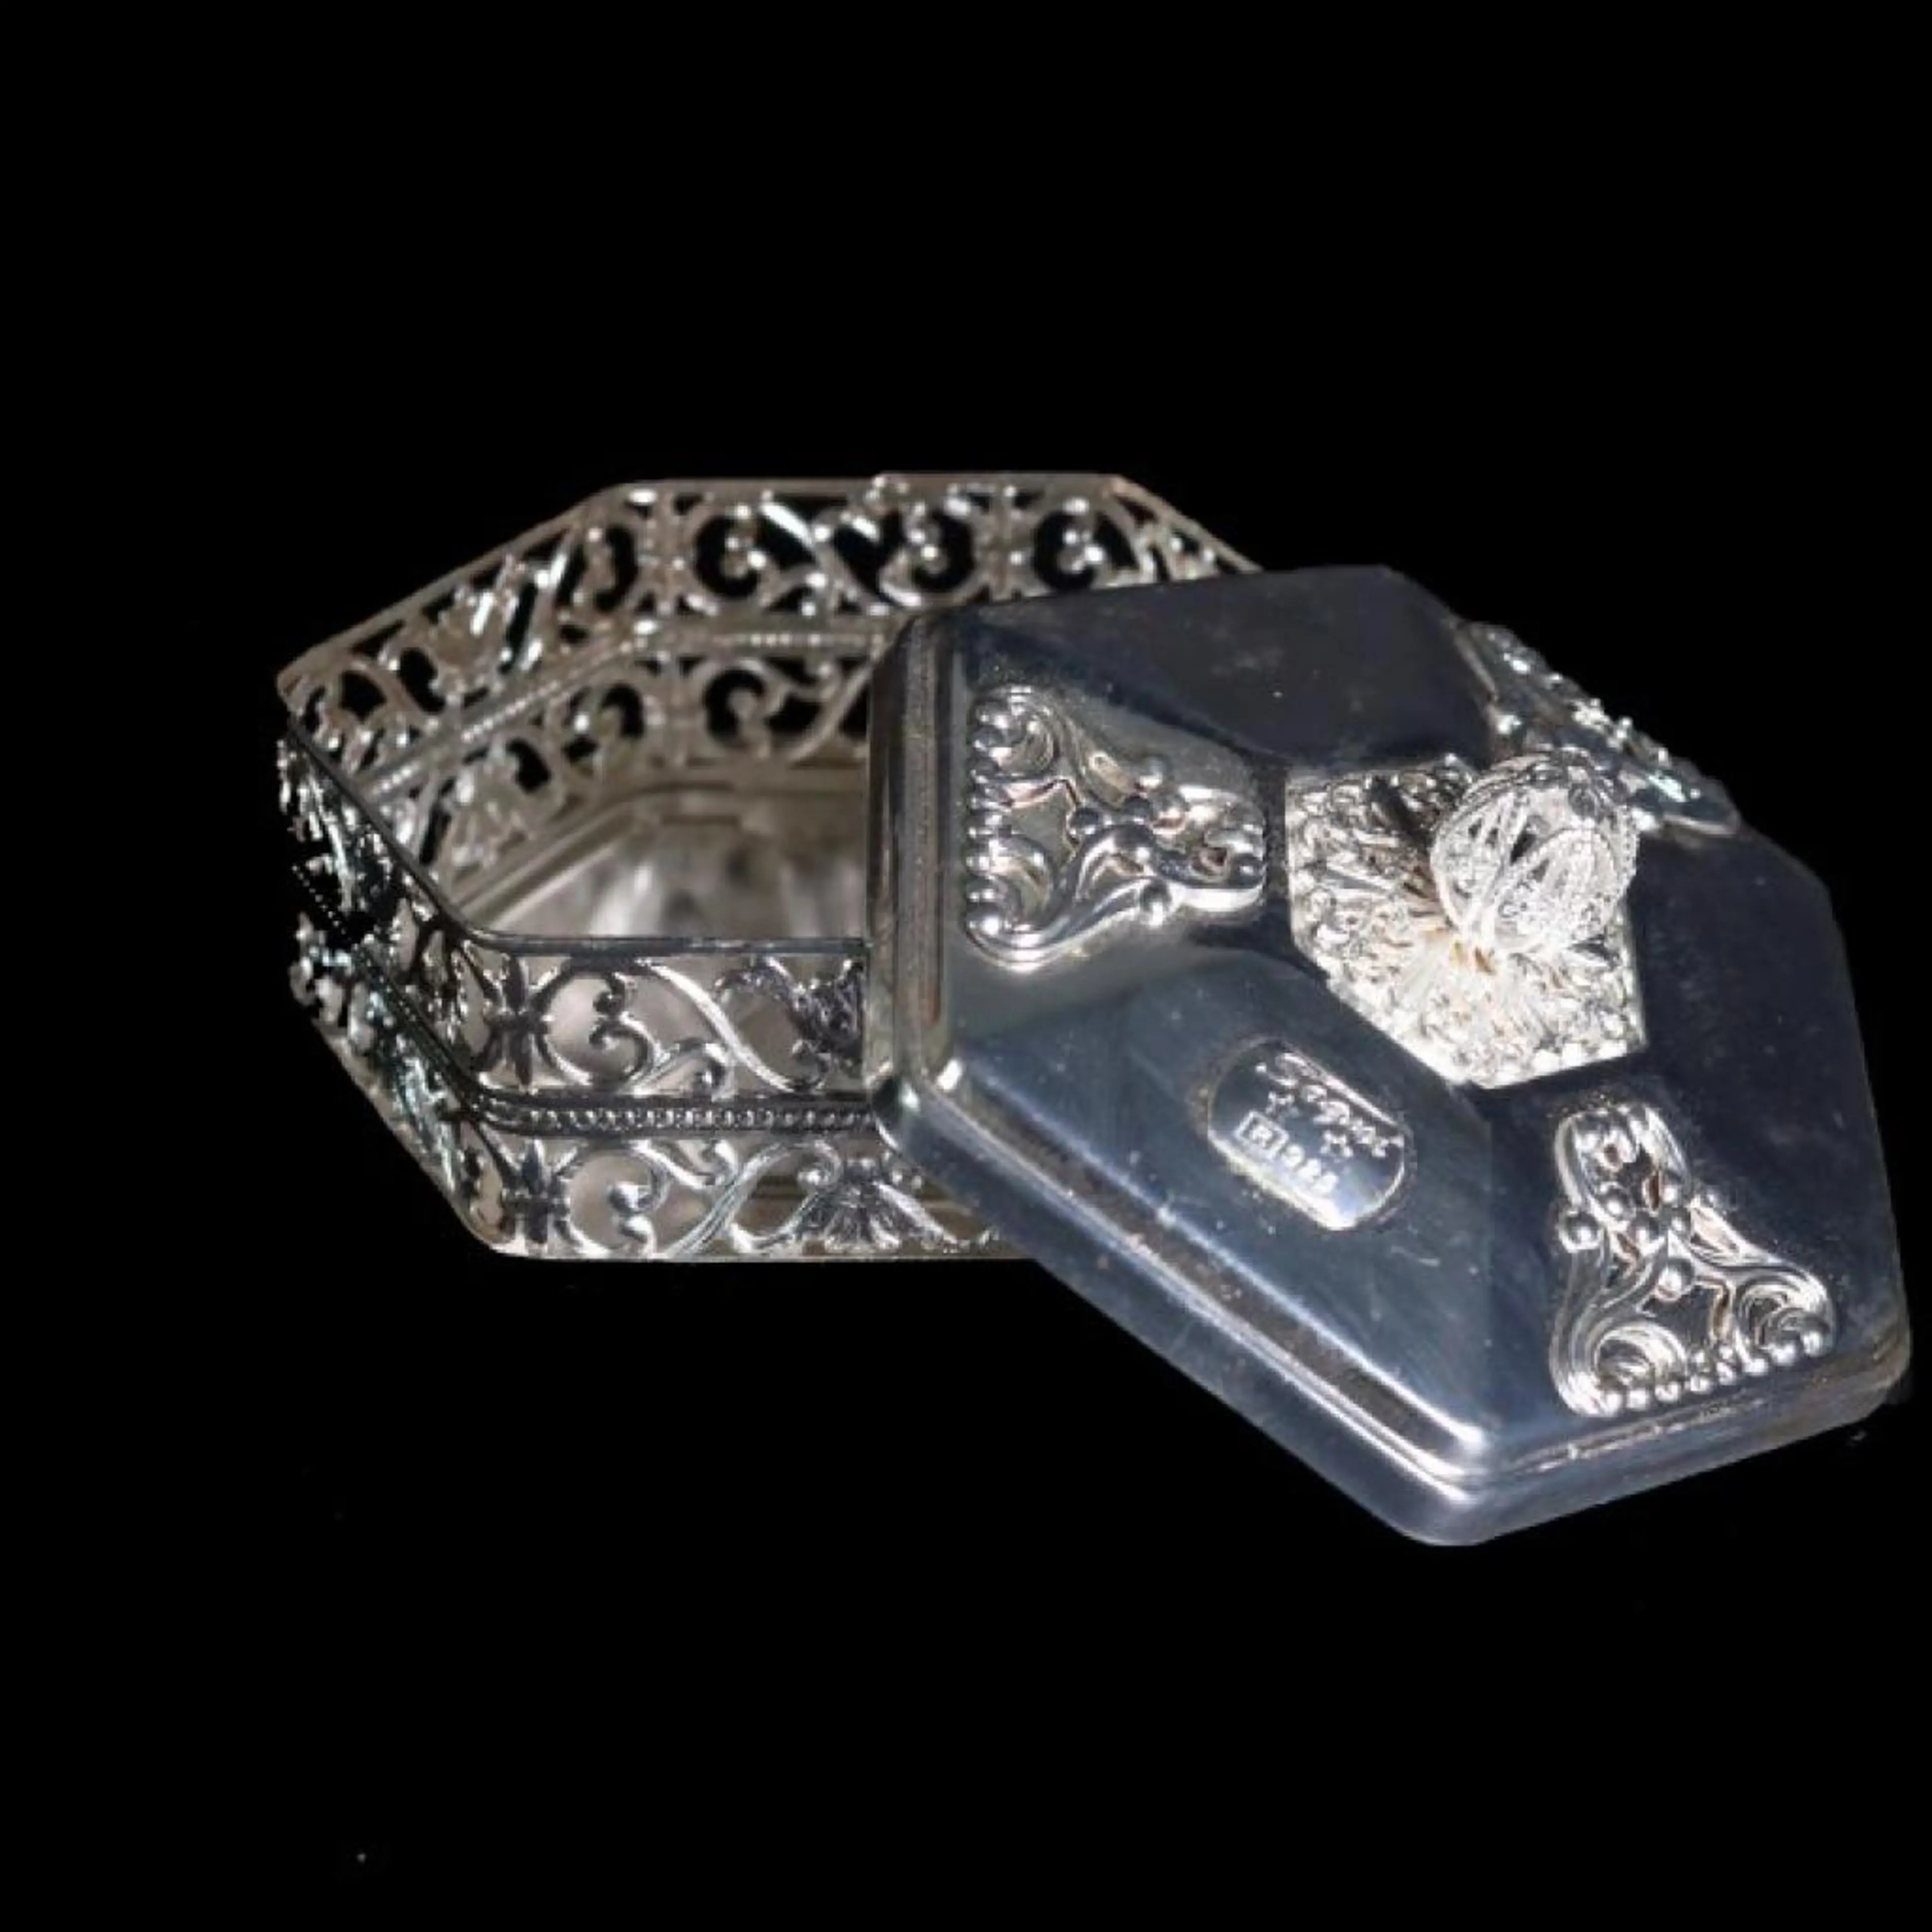 Silver Jewellery Box